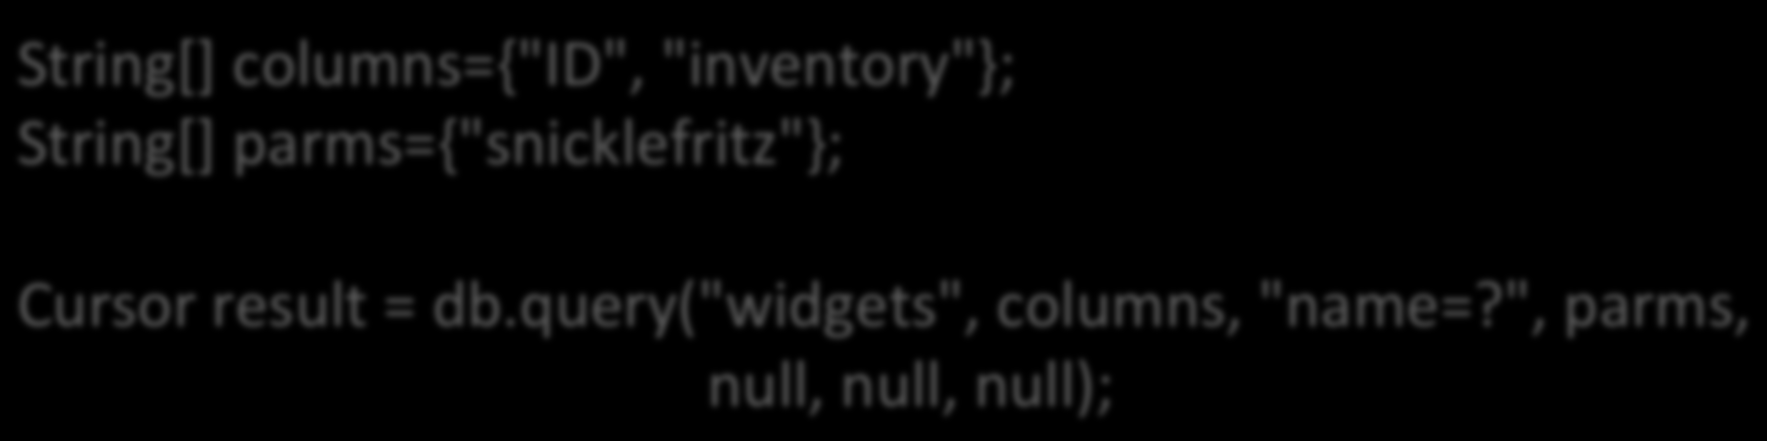 UAlizando o método query() String[] columns={"id", "inventory"; String[] parms={"snicklefritz"; Cursor result = db.